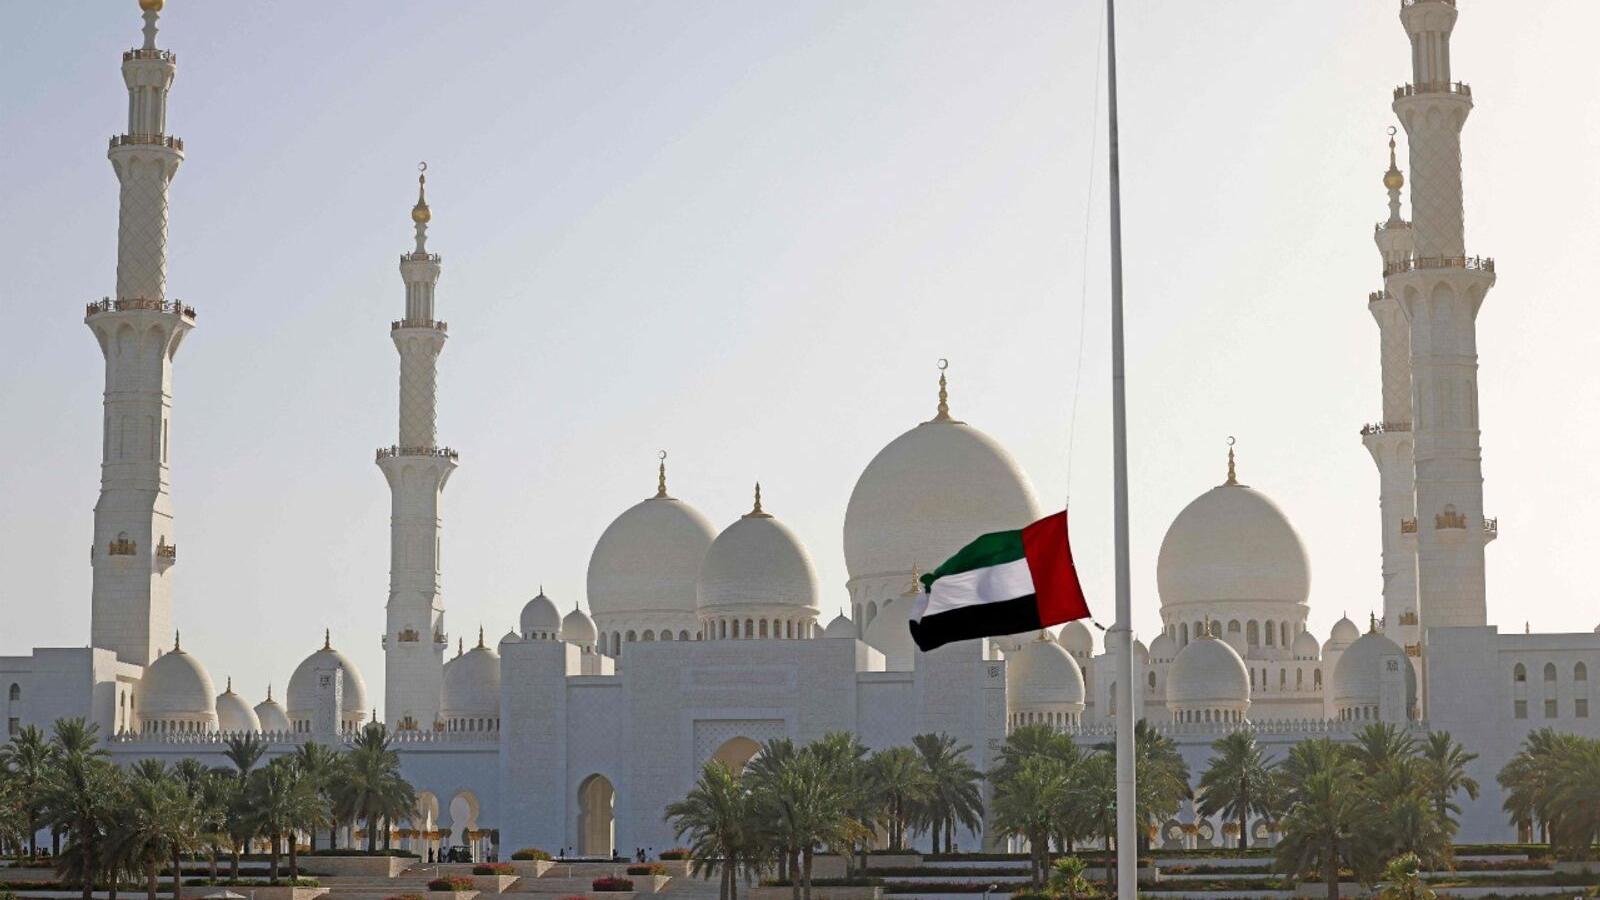 UAE mourns Sheikh Khalifa: Abu Dhabi suspends fireworks, events, festivals - News